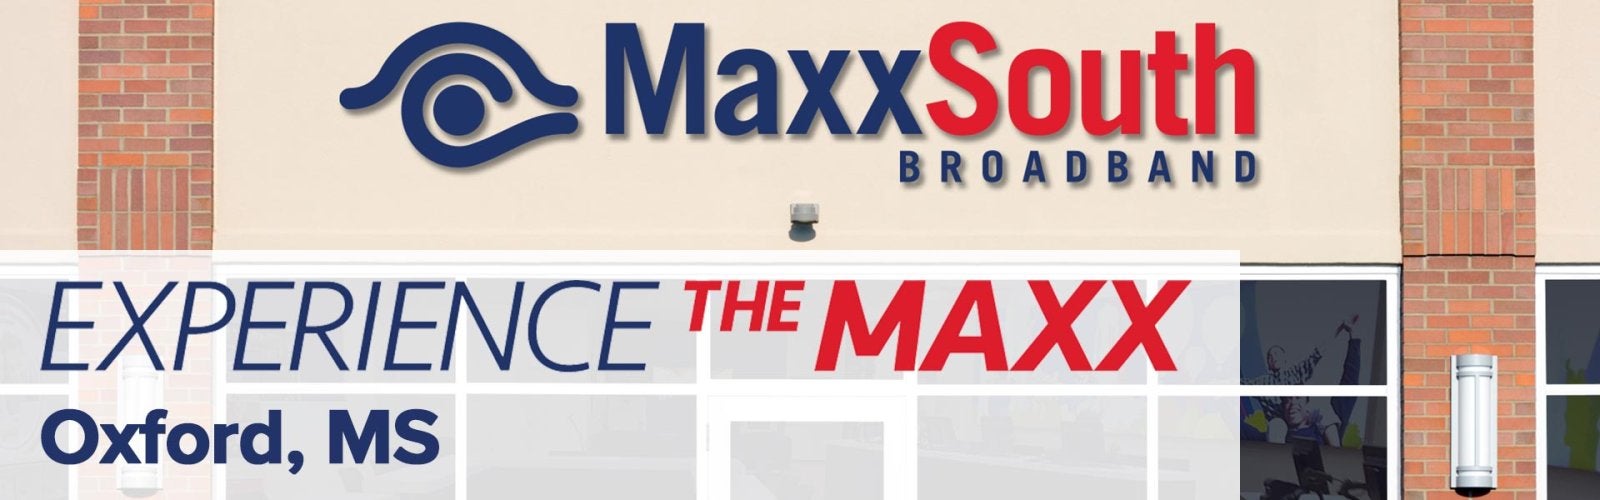 maxxsouth store near me, maxxsouth oxford store, oxford, maxxsouth support